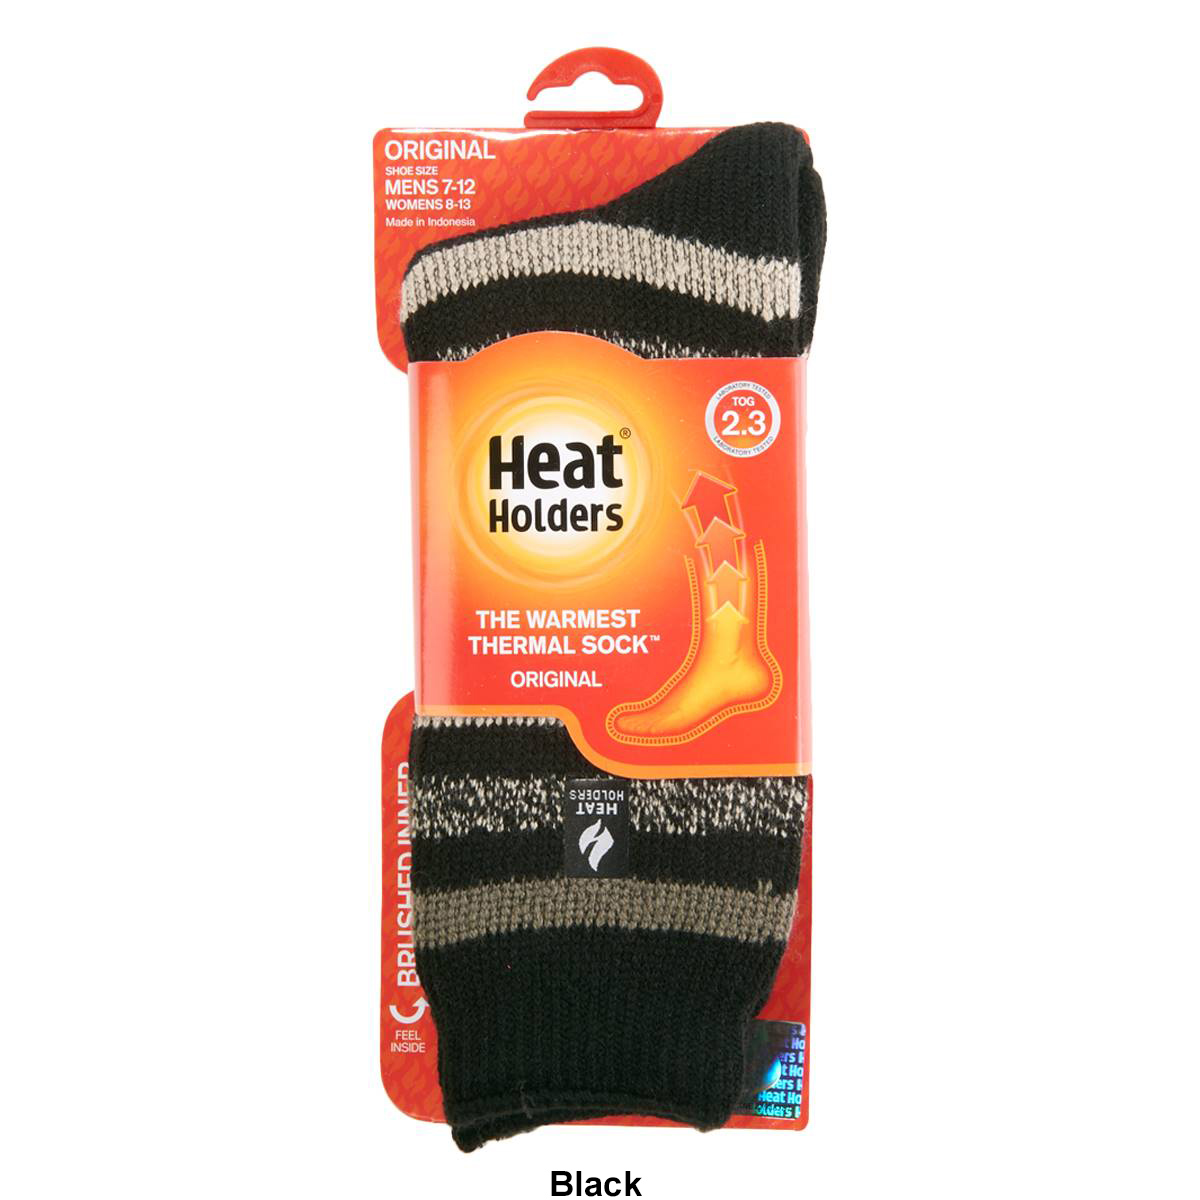 Mens Heat Holders(R) Original(tm) Brian Stripe Crew Socks